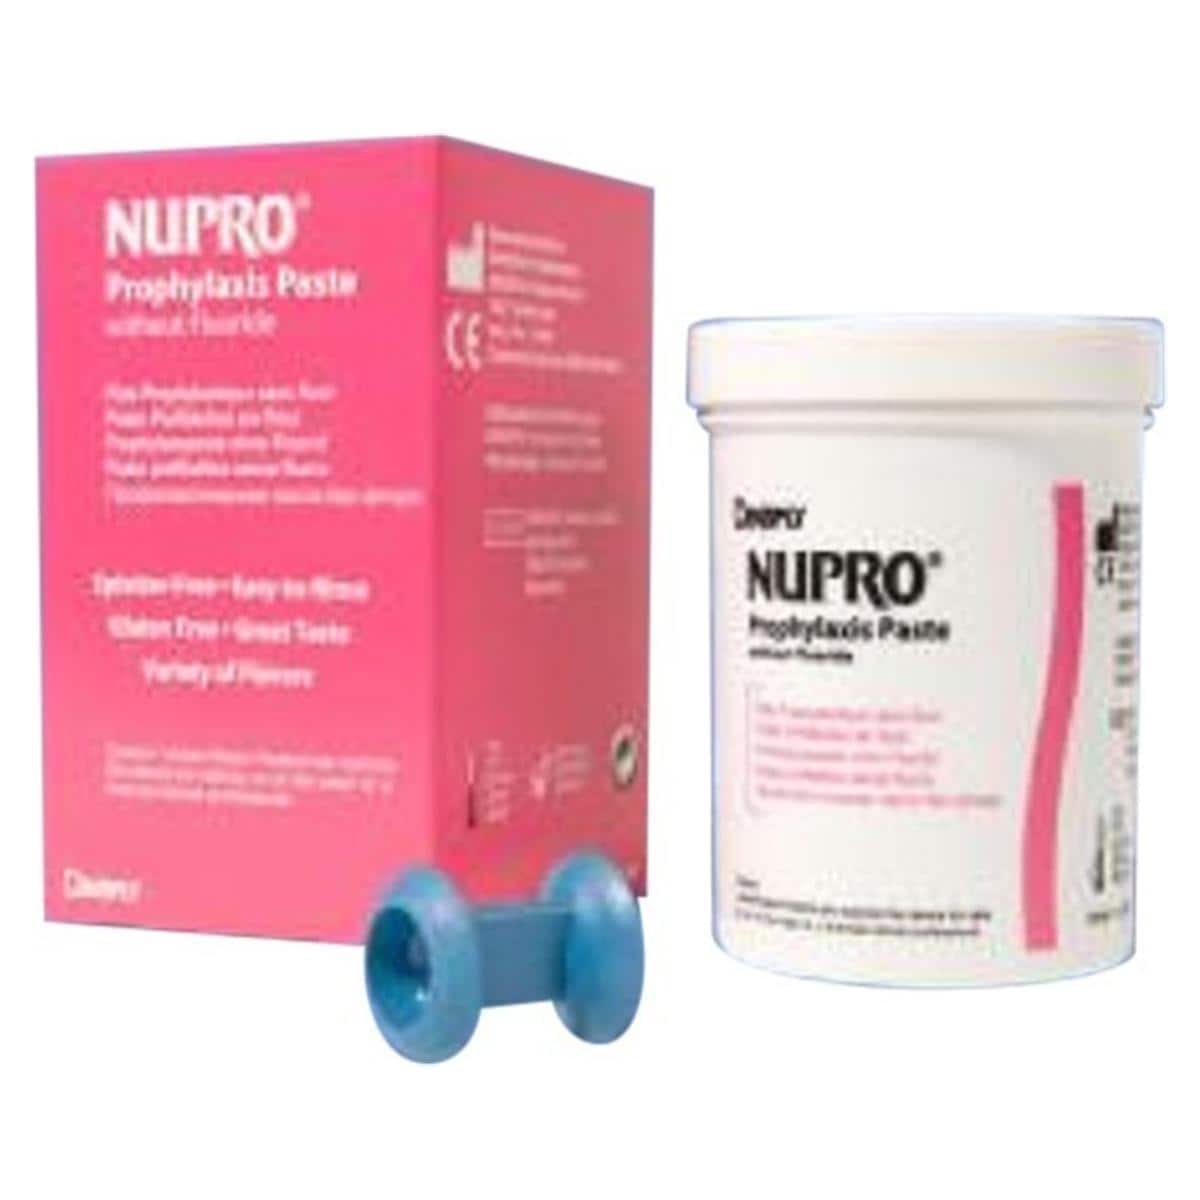 Nupro Prophylaxis Paste sans fluorure - pot - fin, orange